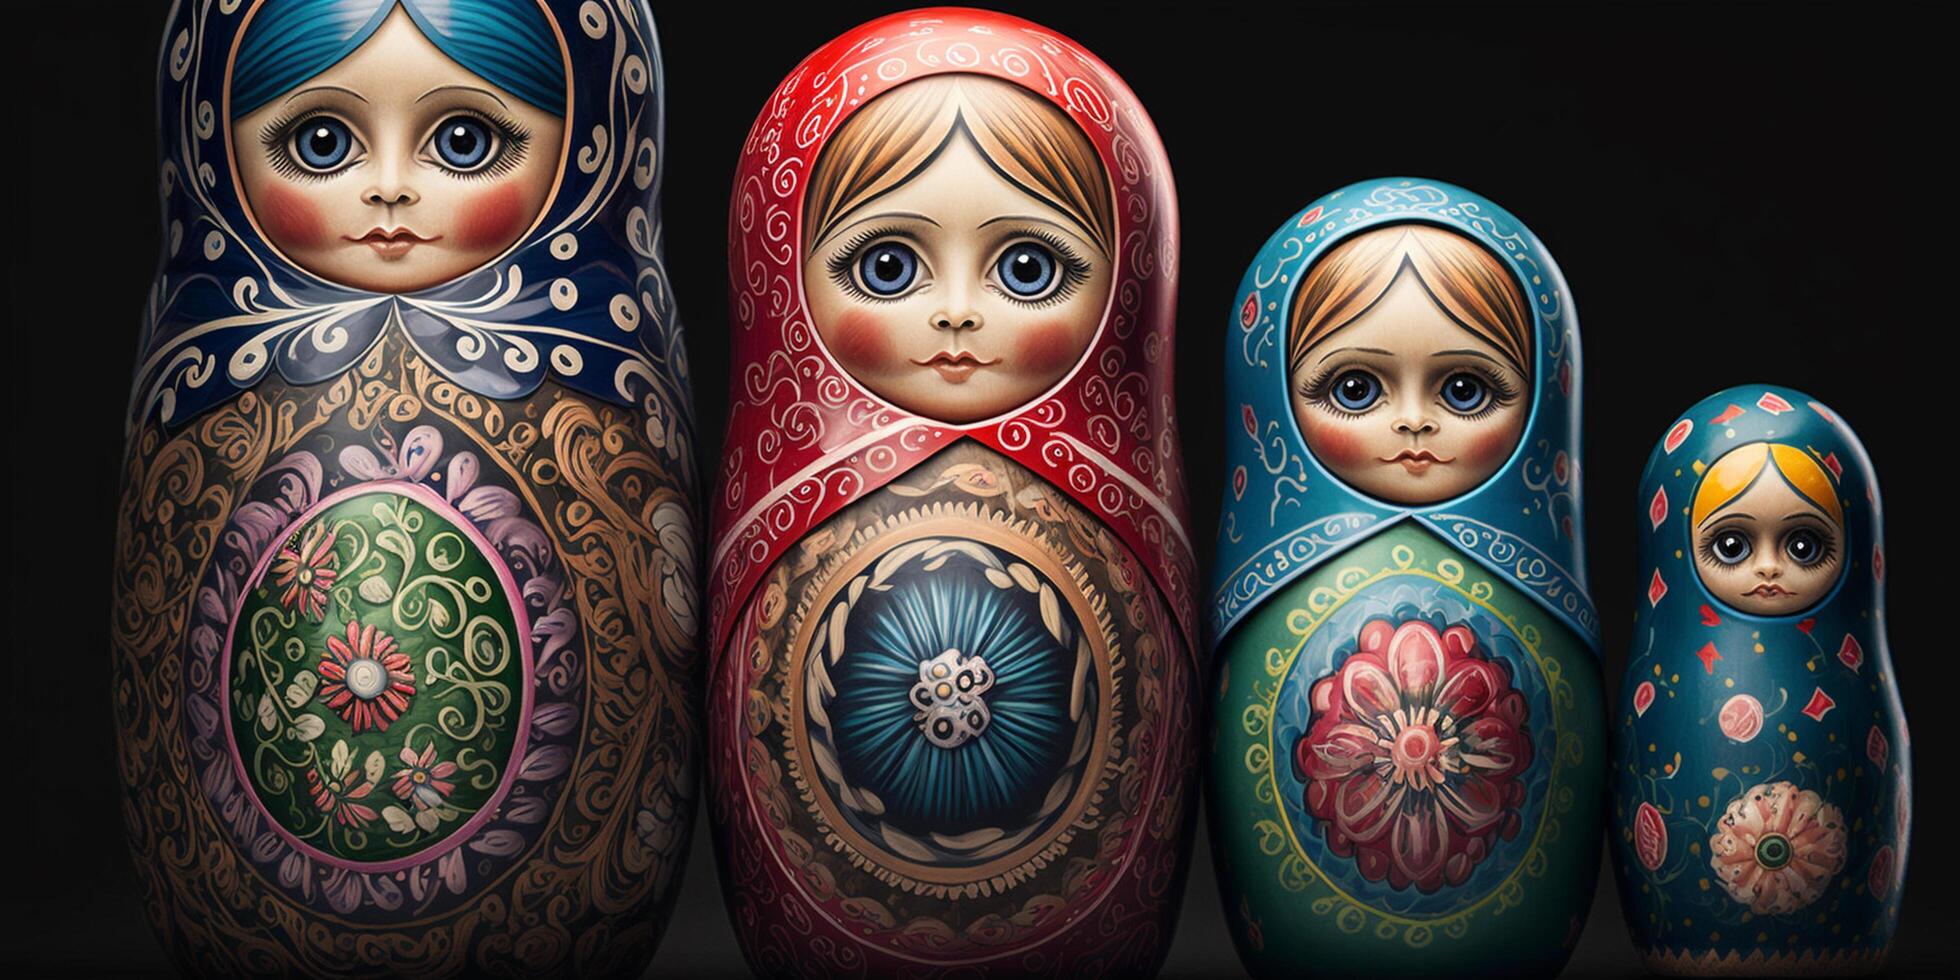 Vibrant Matryoshkas, Traditional Russian Nesting Dolls photo